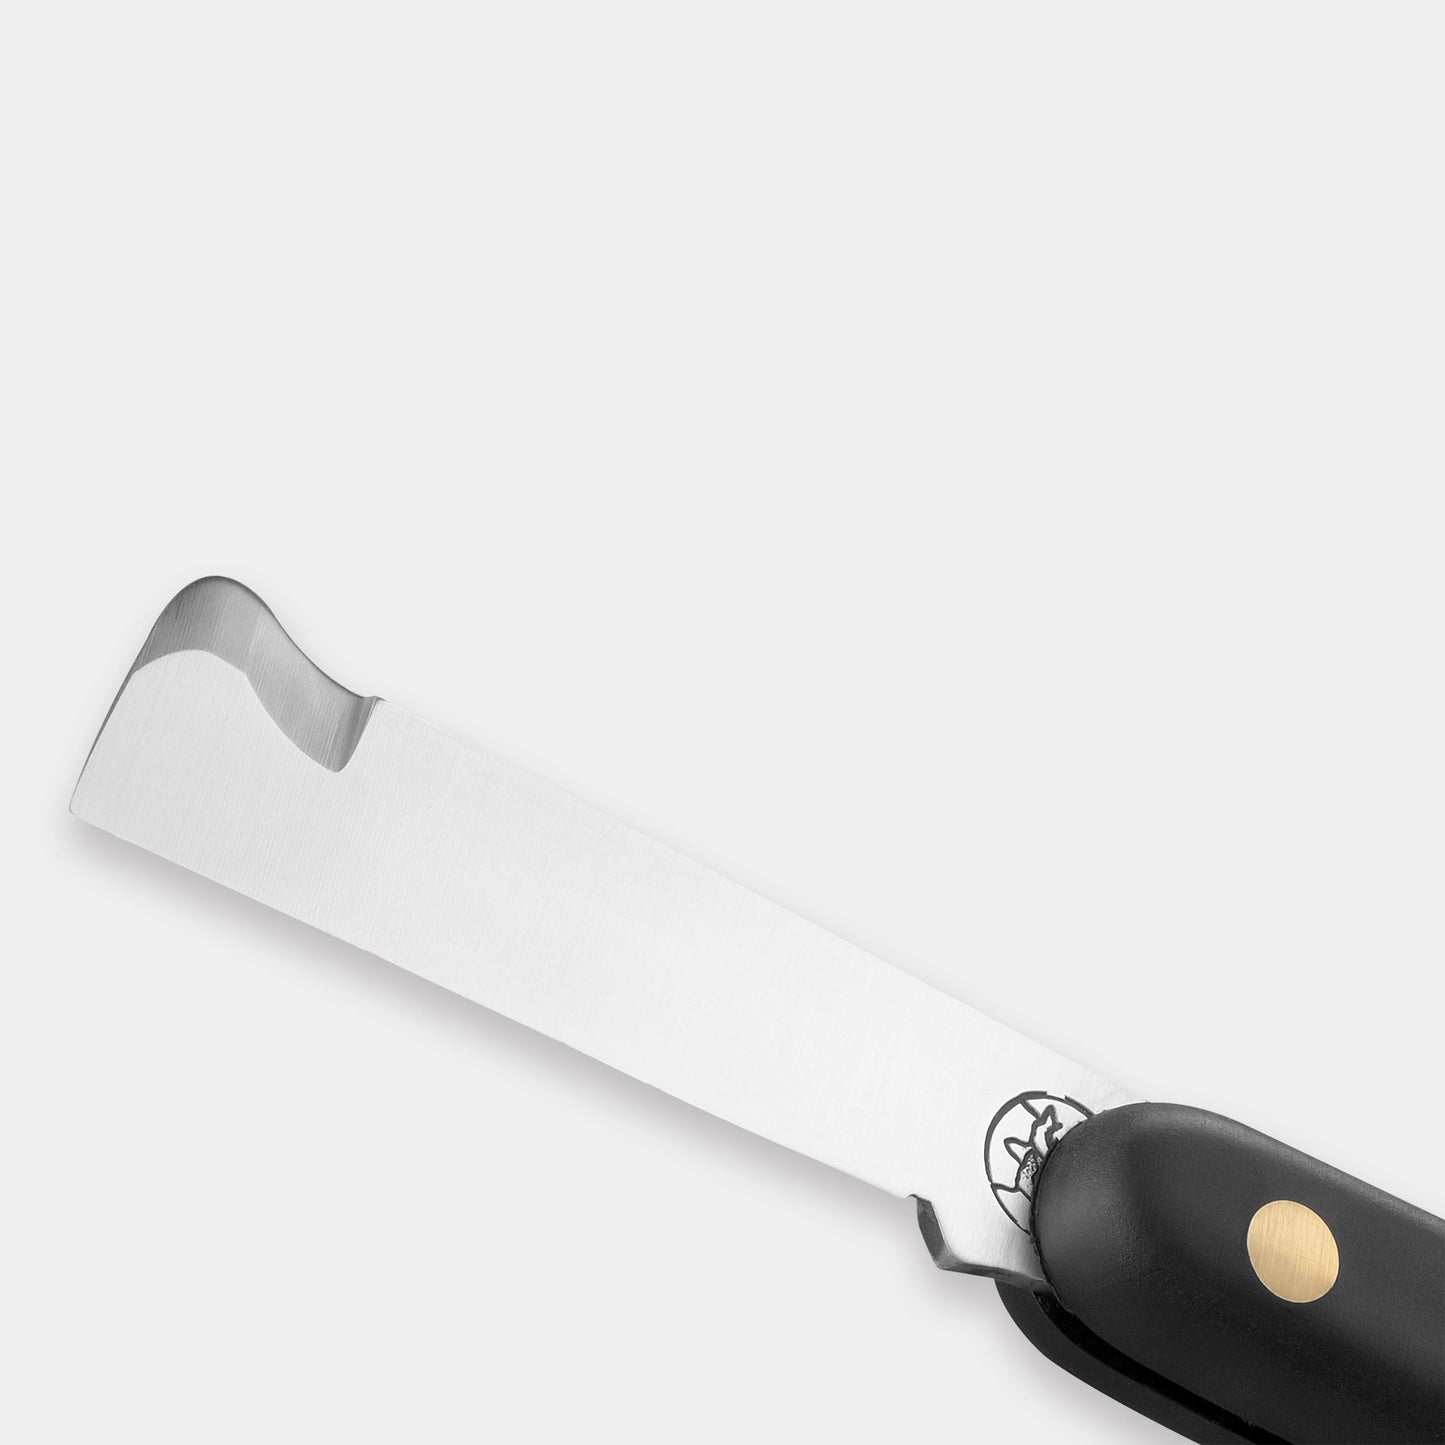 
                  
                    GRAFTING KNIFE 202 SuSi - SUPER SIMPLY LEFTY - Böhler N690 STAINLESS STEEL
                  
                